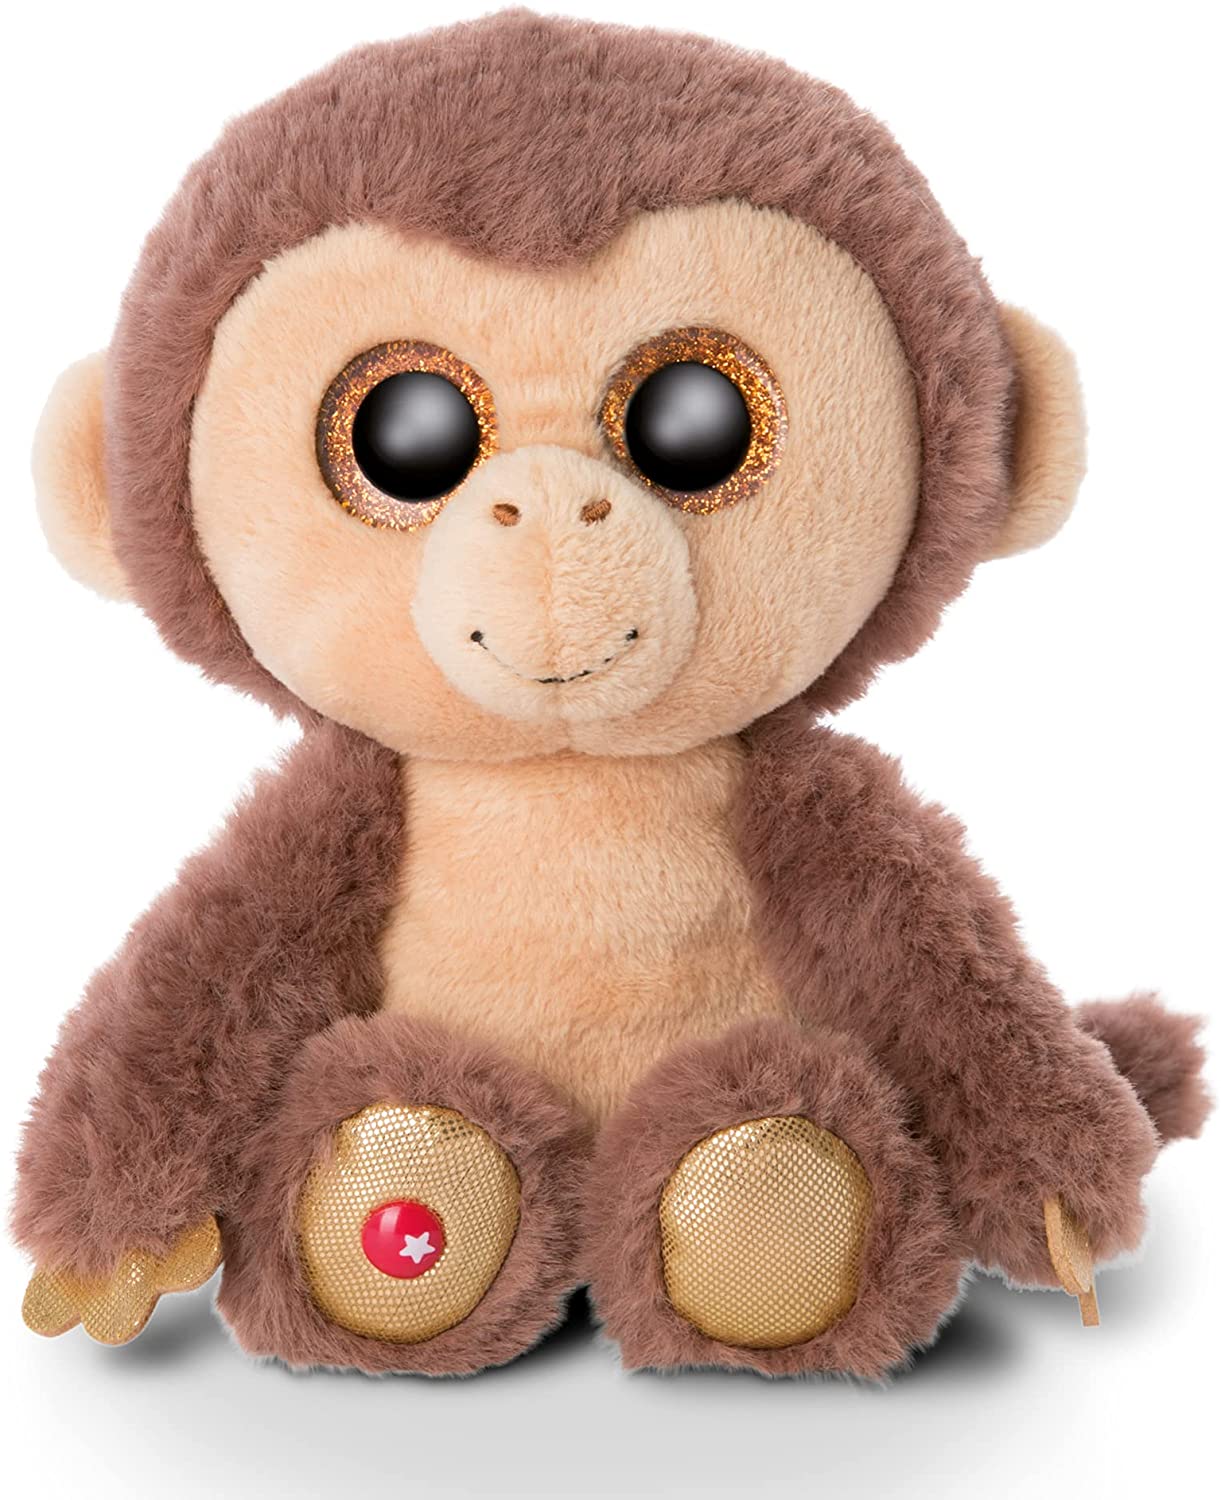 Plišana igračka GLUBSCHIS Monkey Hobson 15 cm 